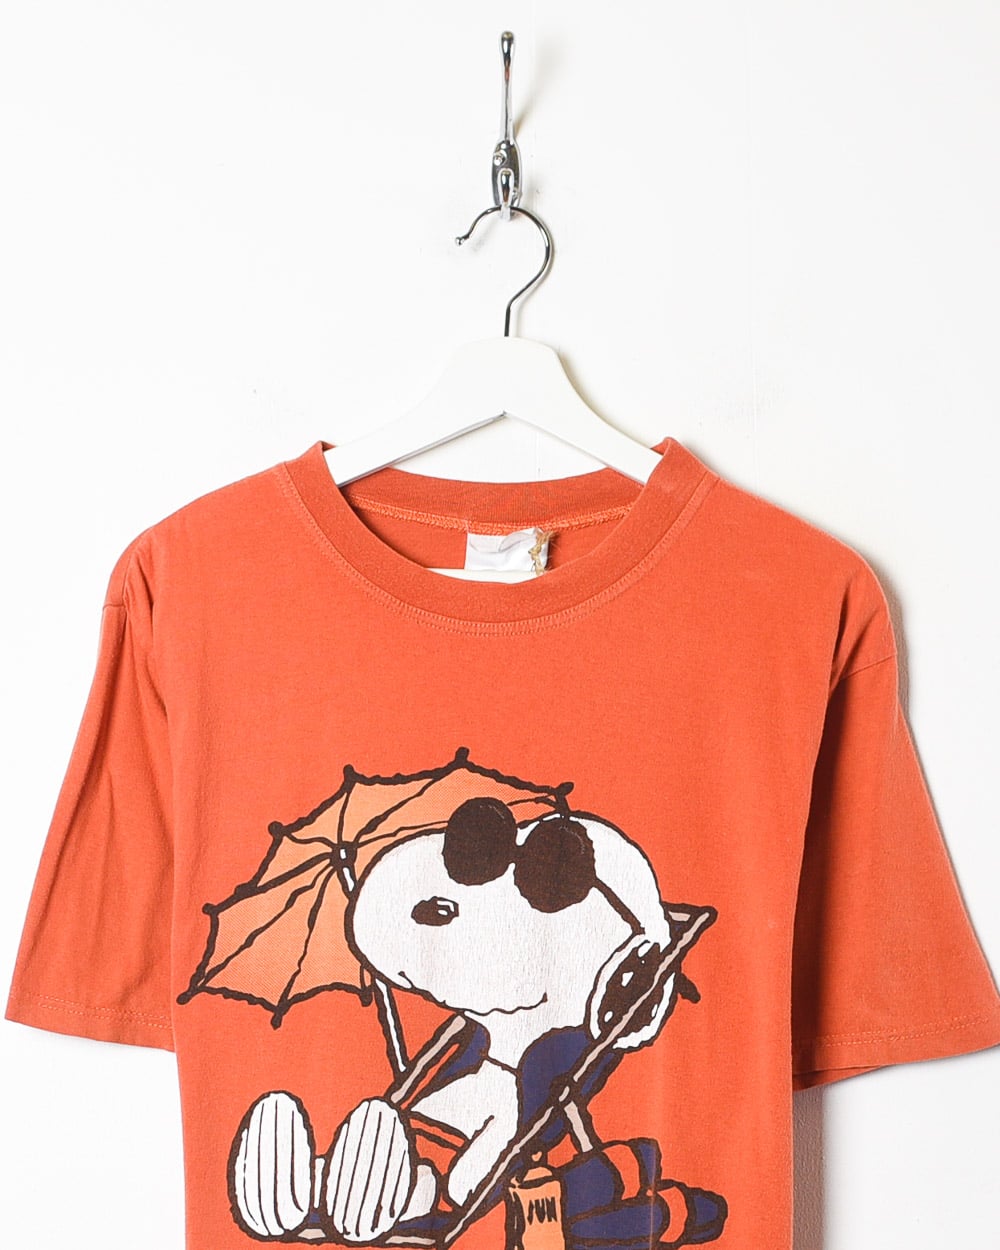 Orange Beach Snoopy Graphic T-Shirt - Small